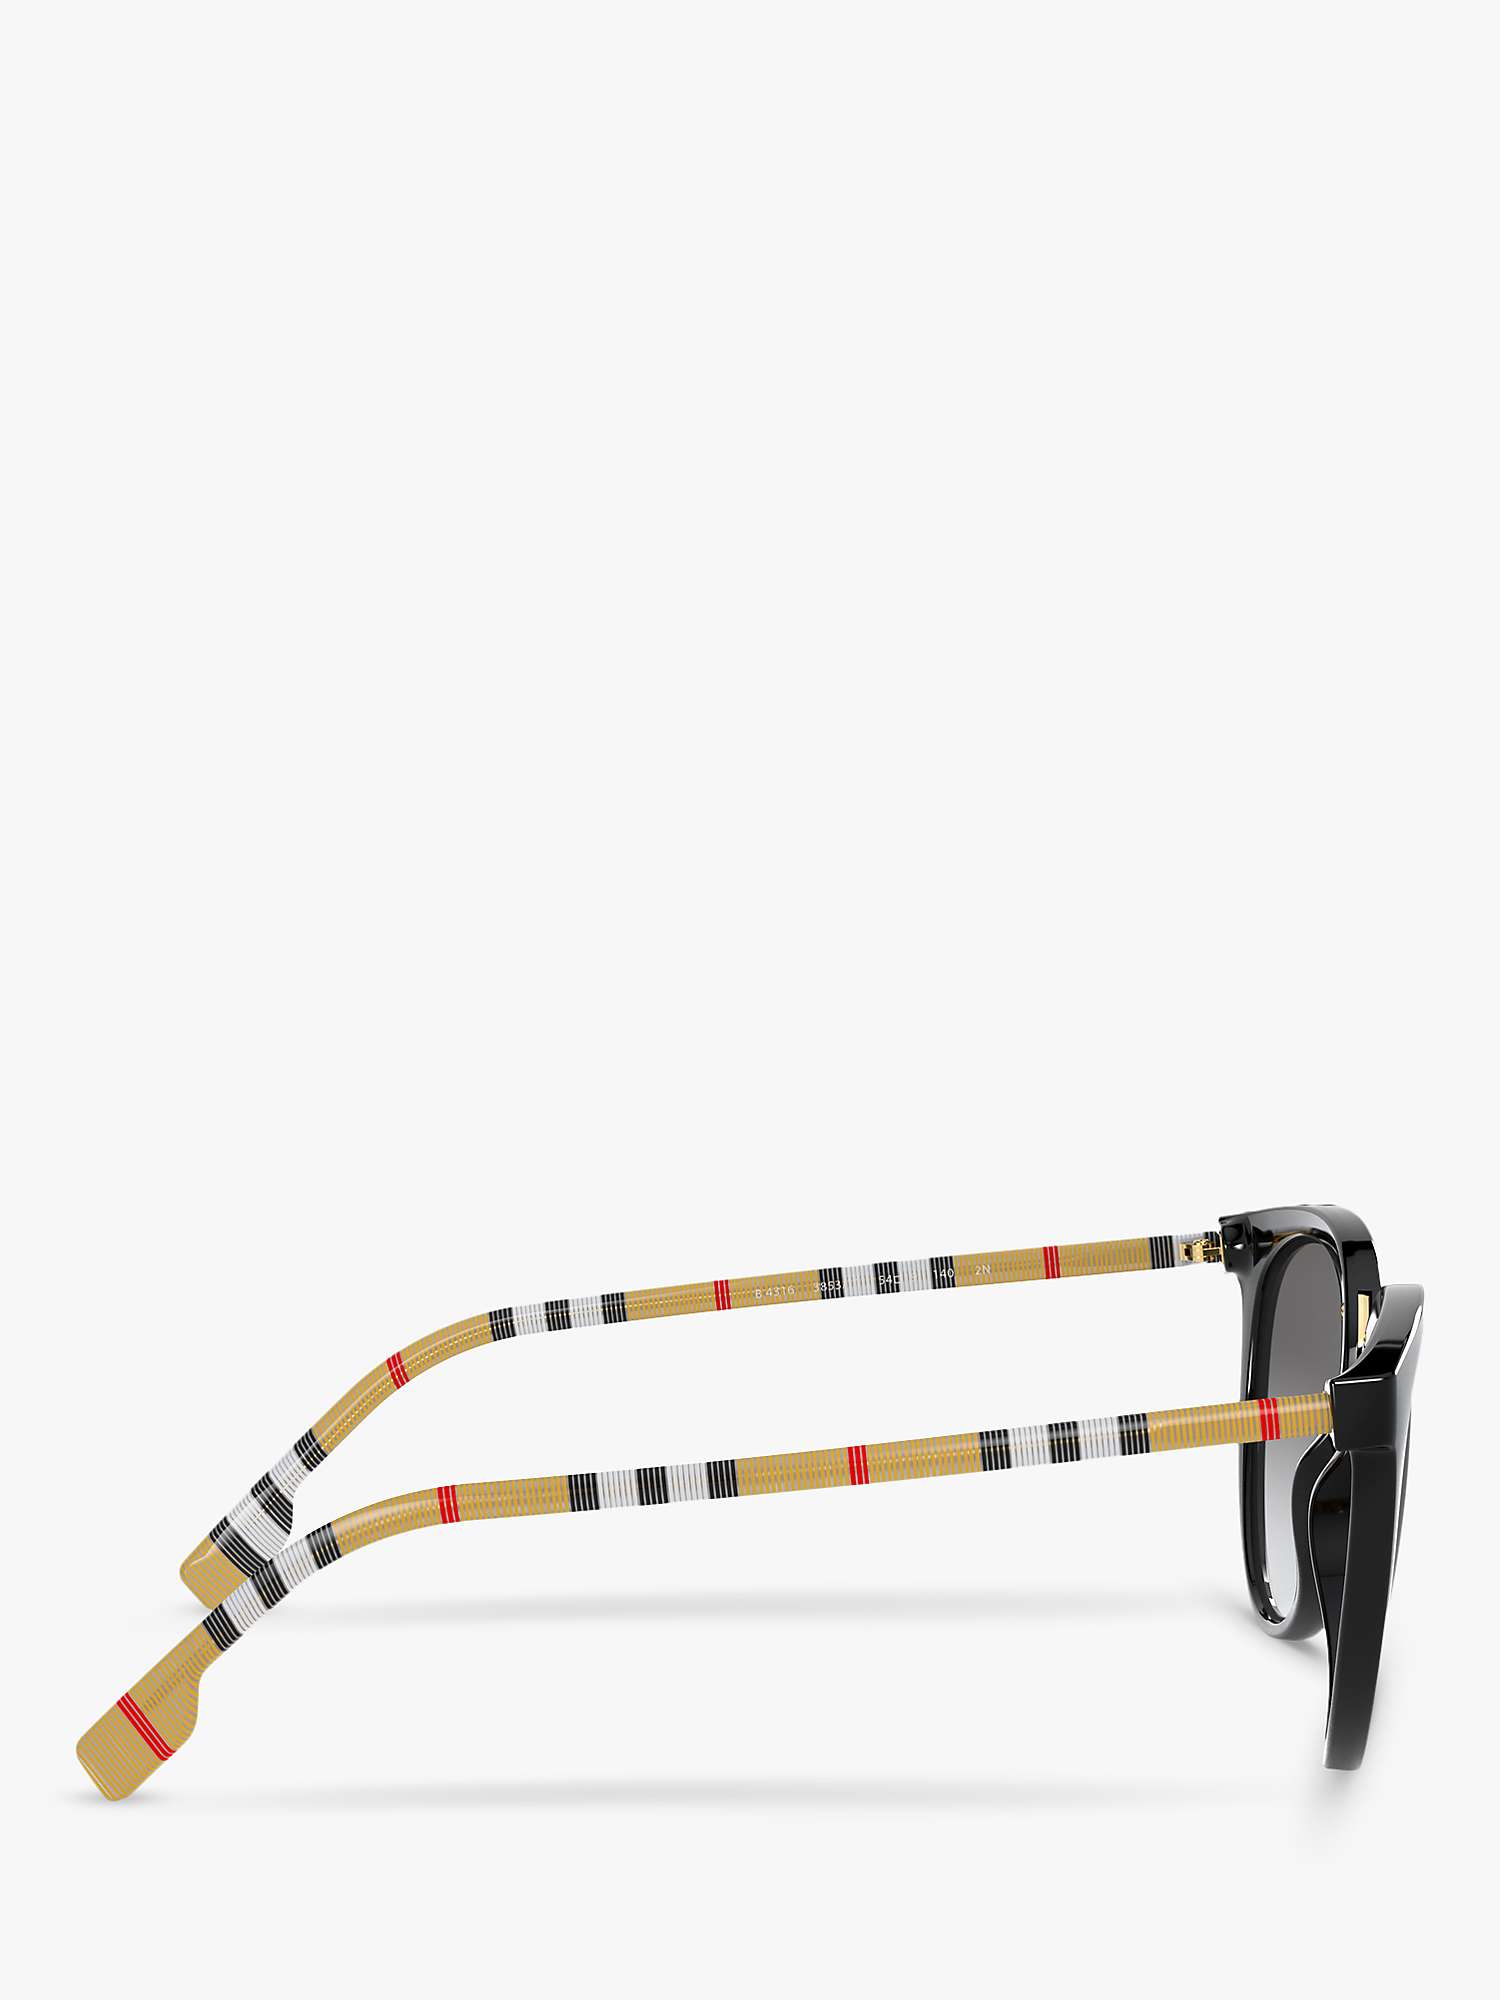 Buy Burberry BE4316 Women's Oval Sunglasses, Black/Grey Gradient Online at johnlewis.com